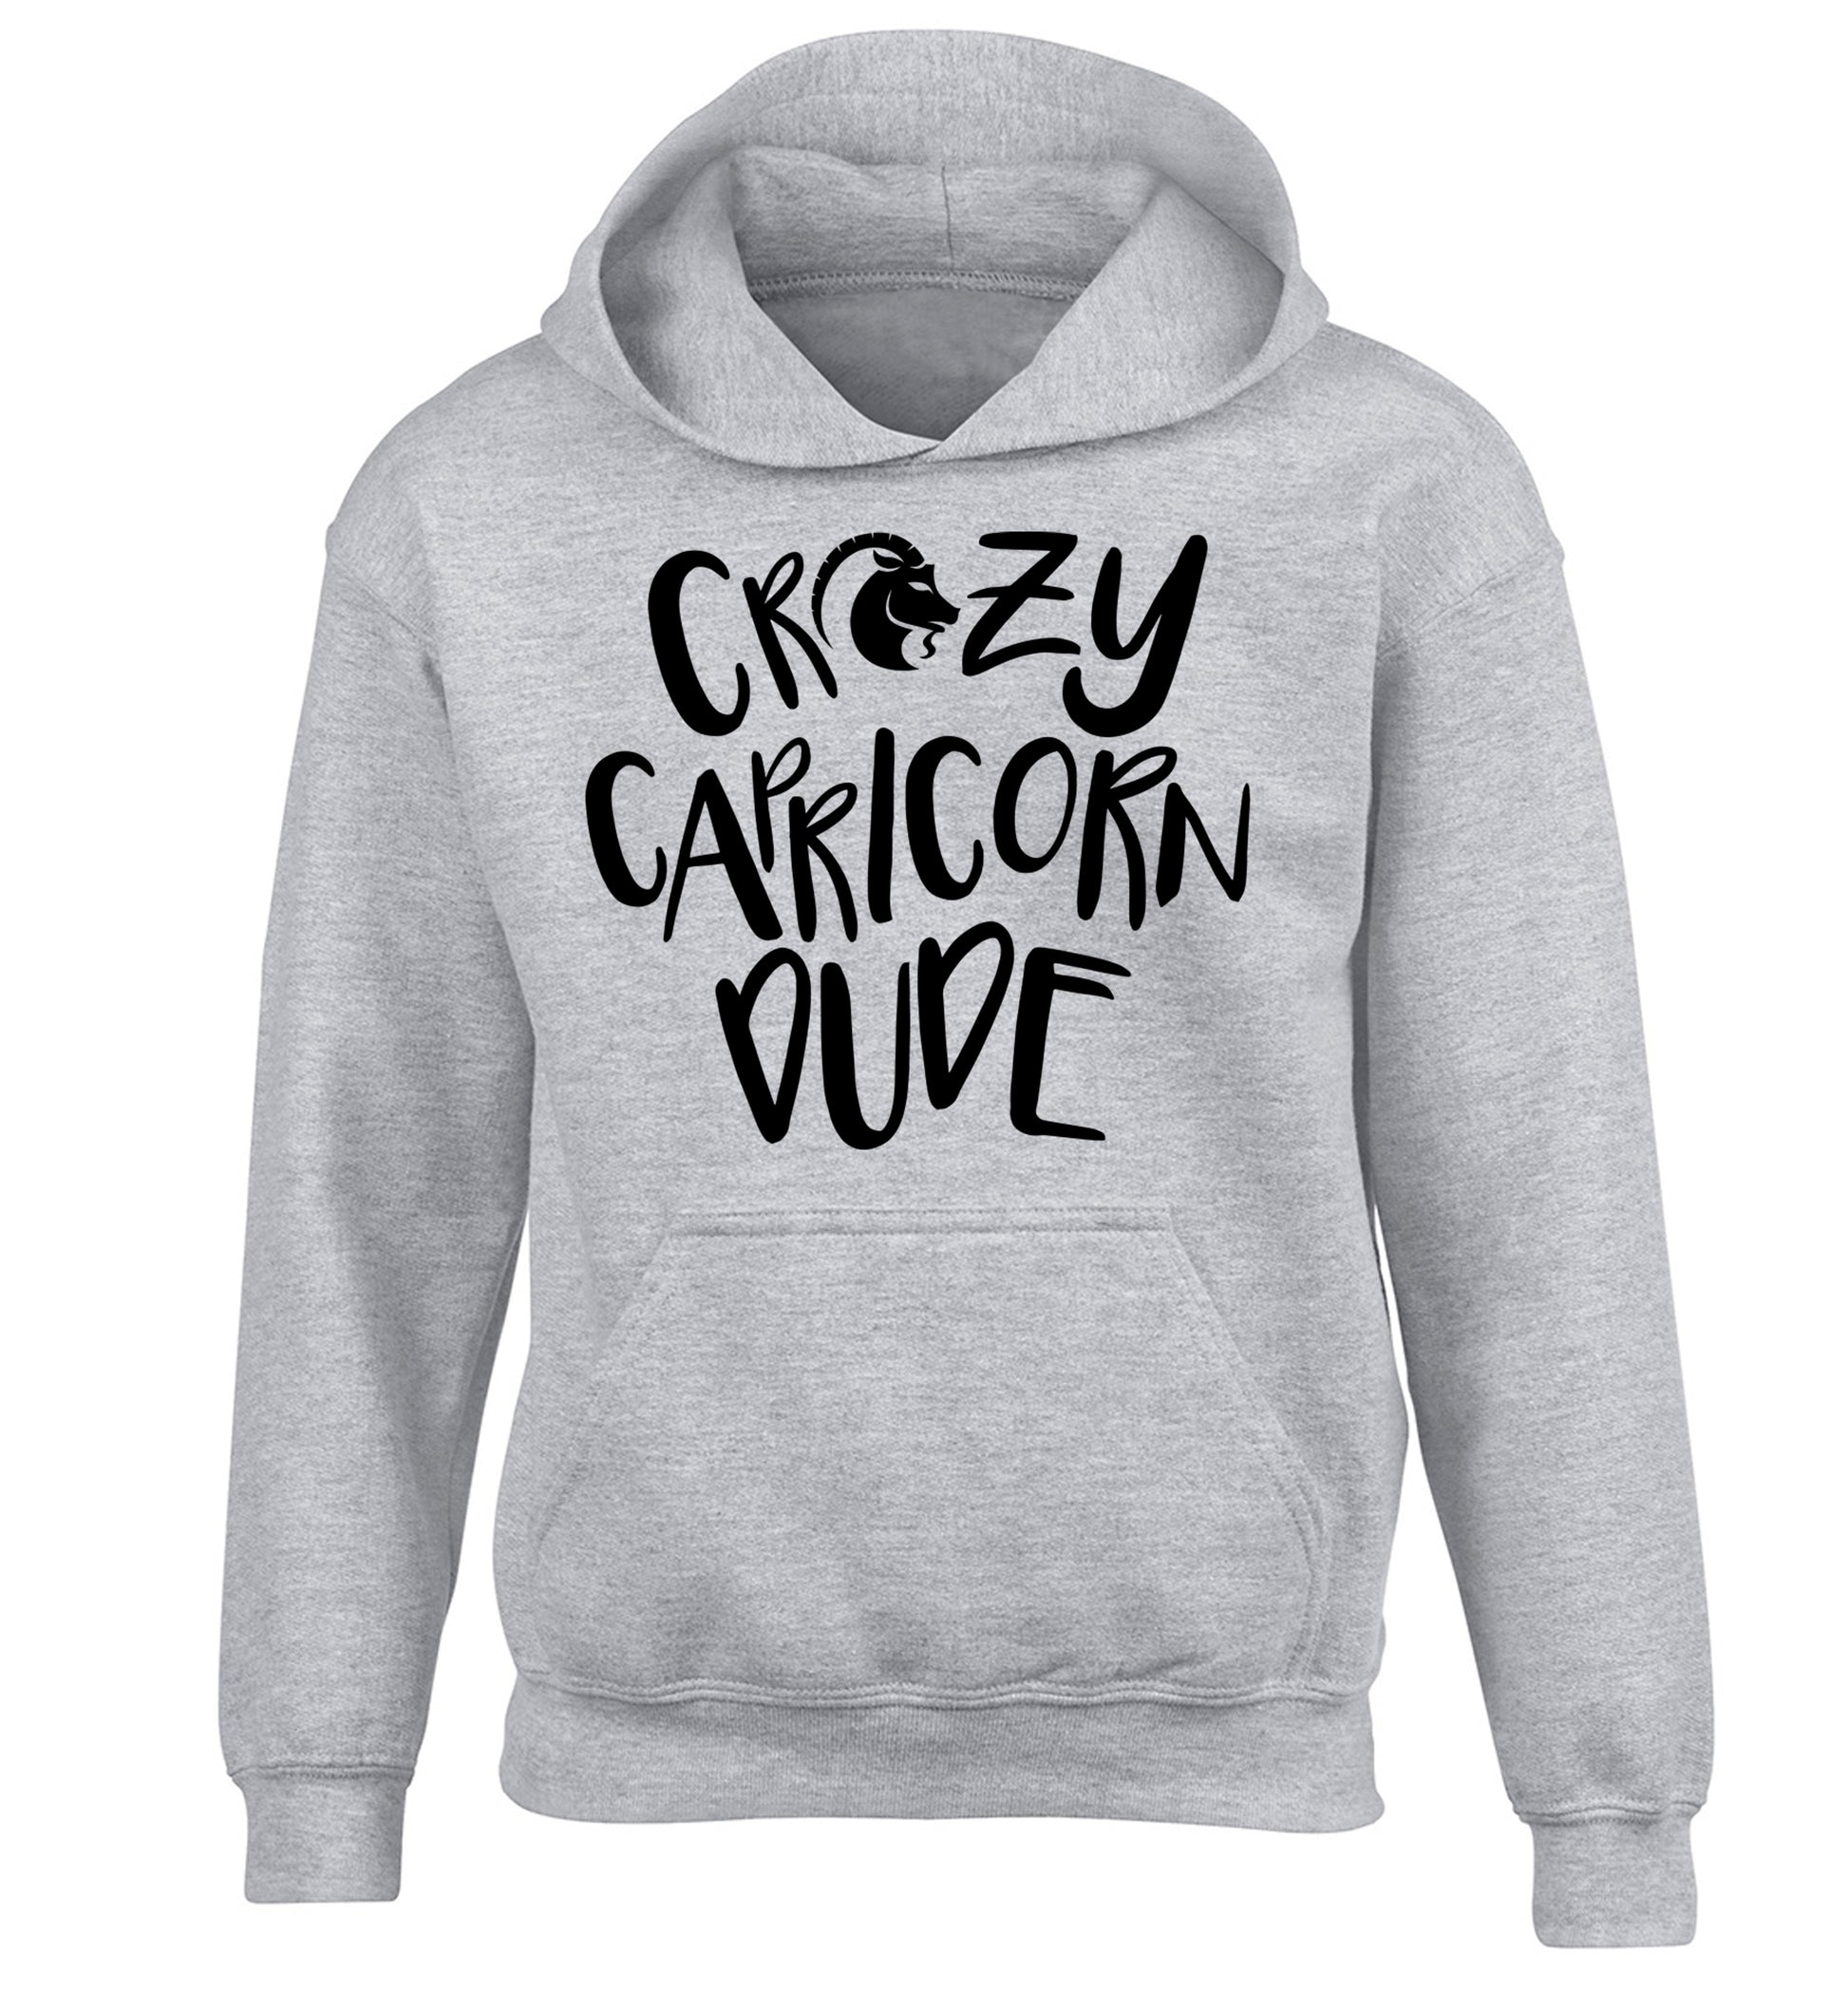 Crazy capricorn dude children's grey hoodie 12-13 Years